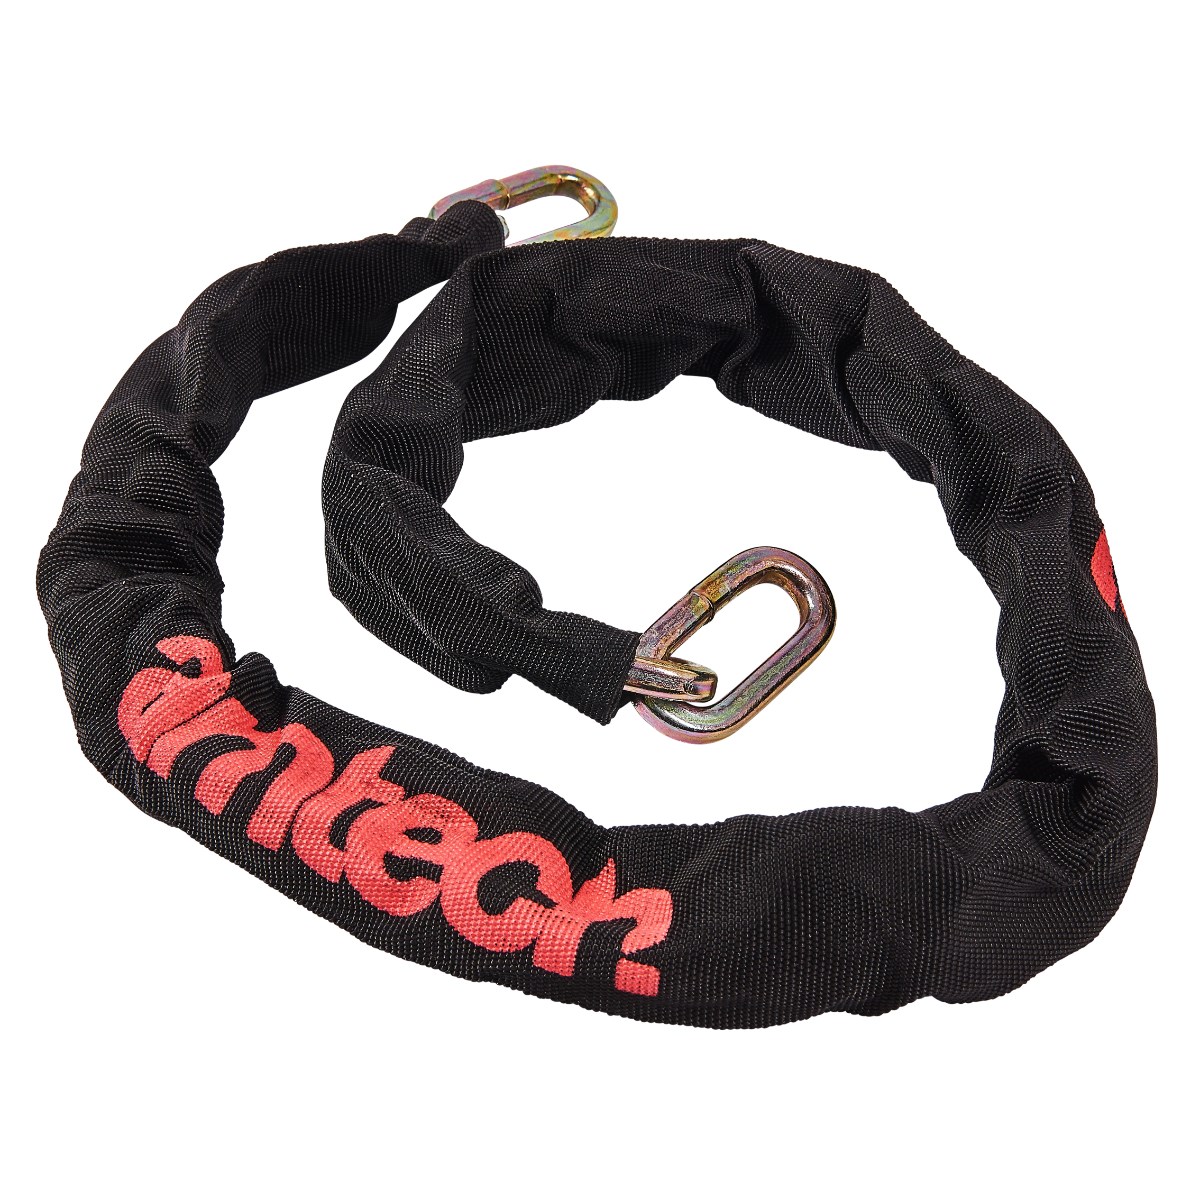 Amtech Motorcycle Bike Chain and Padlock in Sleeve 36 inch 2 Keys S3285 